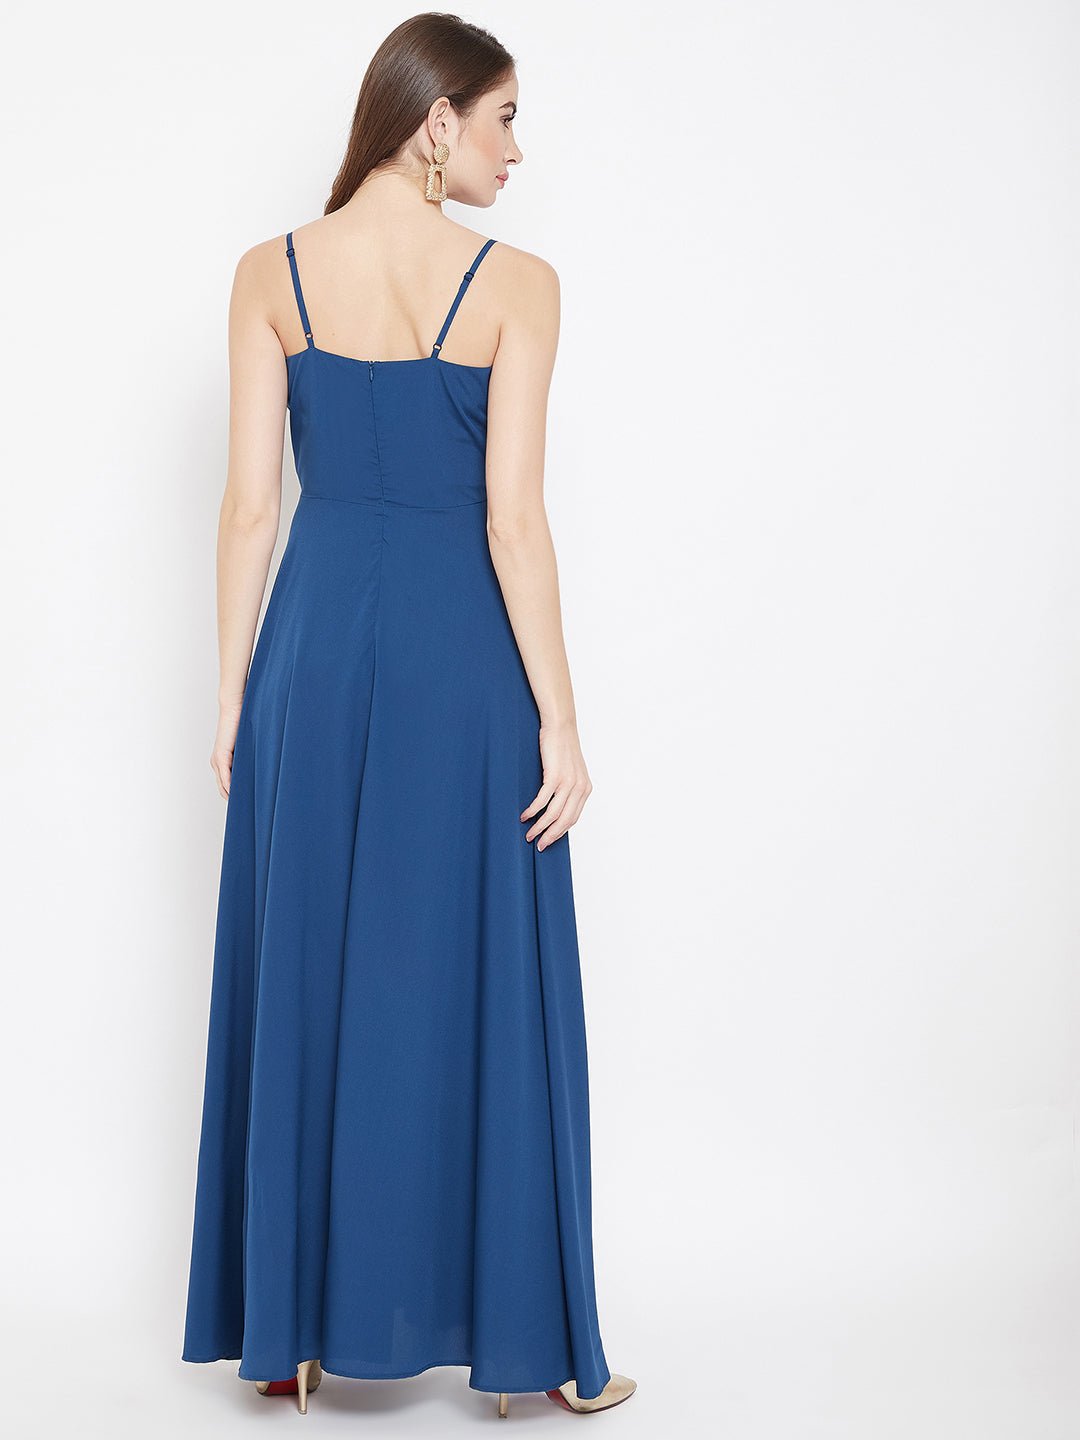 Folk Republic Women Solid Blue V-Neck Sleeveless Crepe Thigh-High Slit A-Line Maxi Dress - #folk republic#